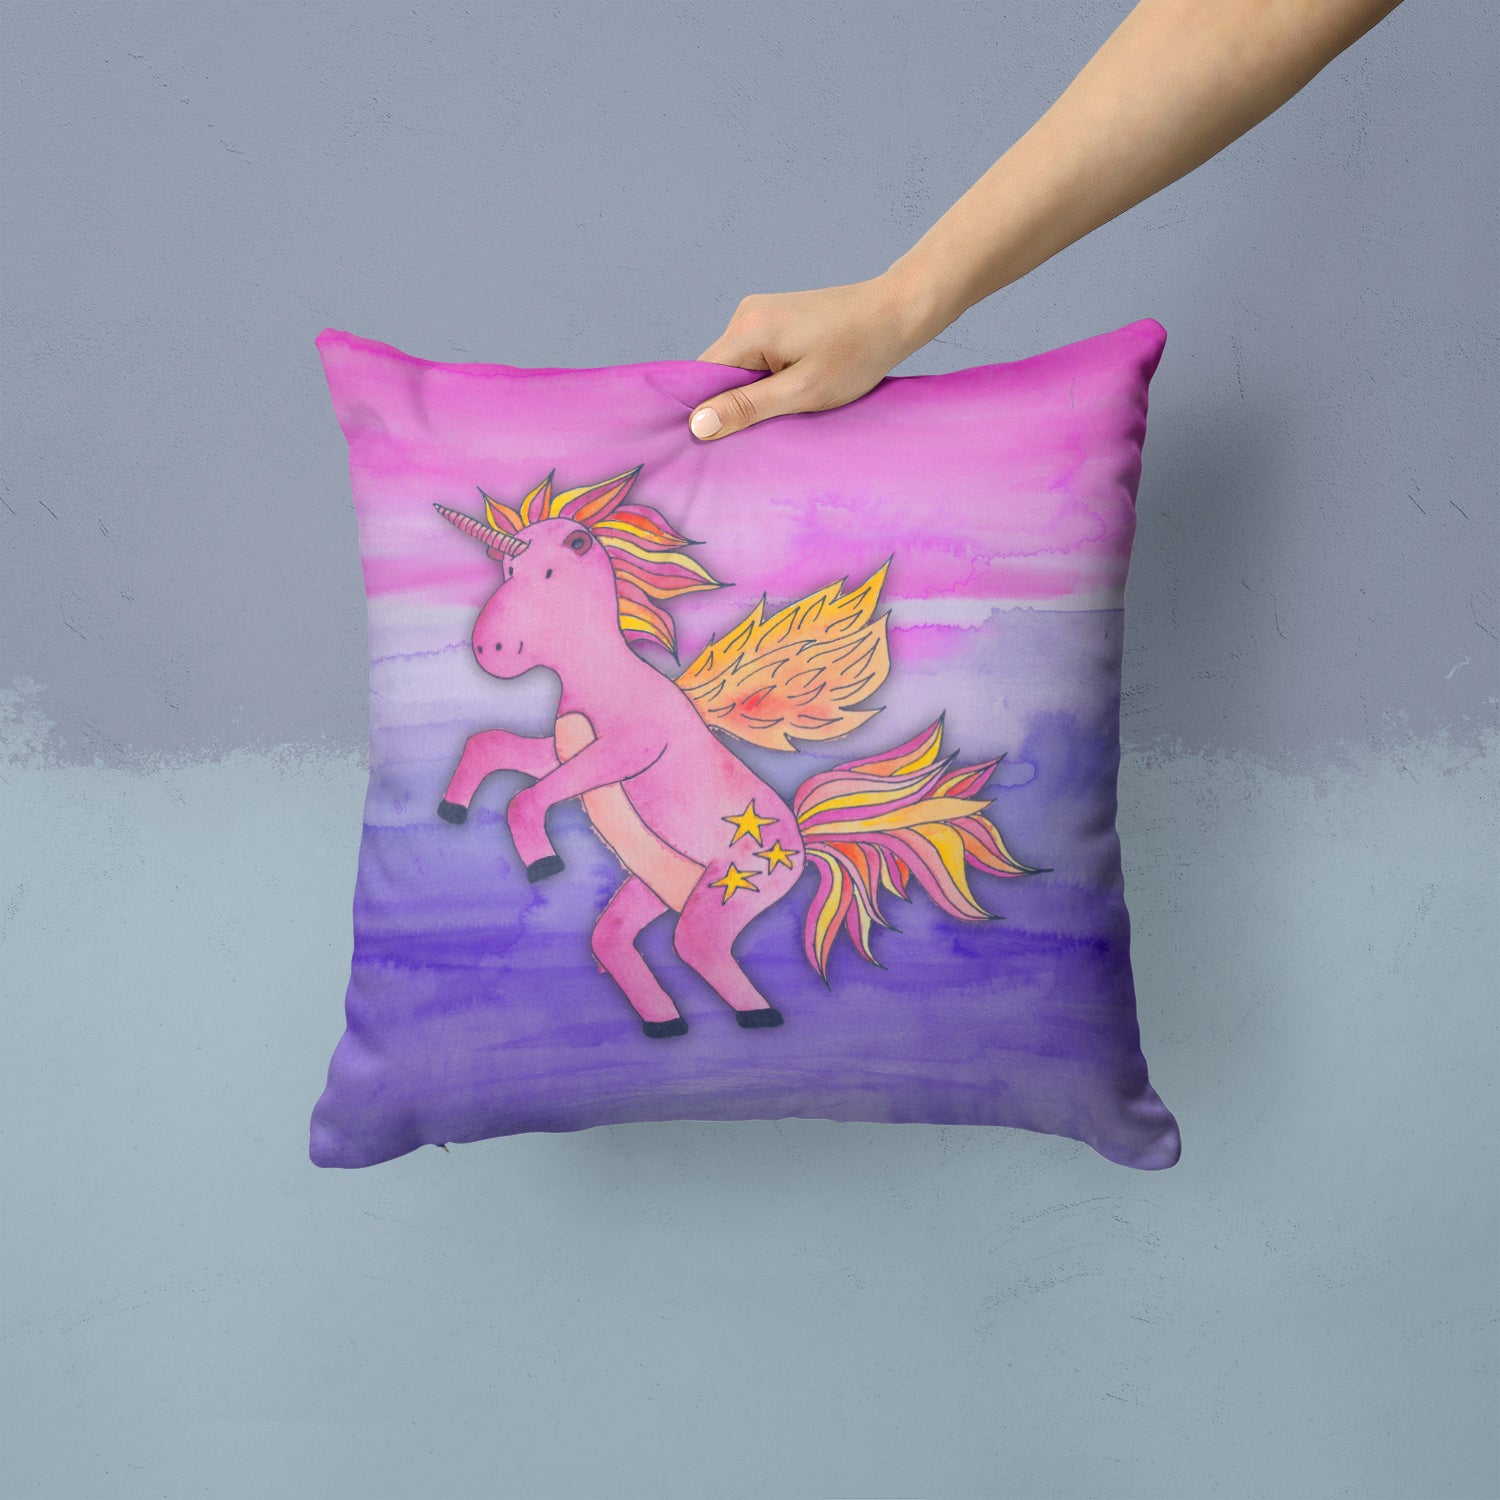 Pink Unicorn Watercolor Fabric Decorative Pillow BB7432PW1414 - the-store.com